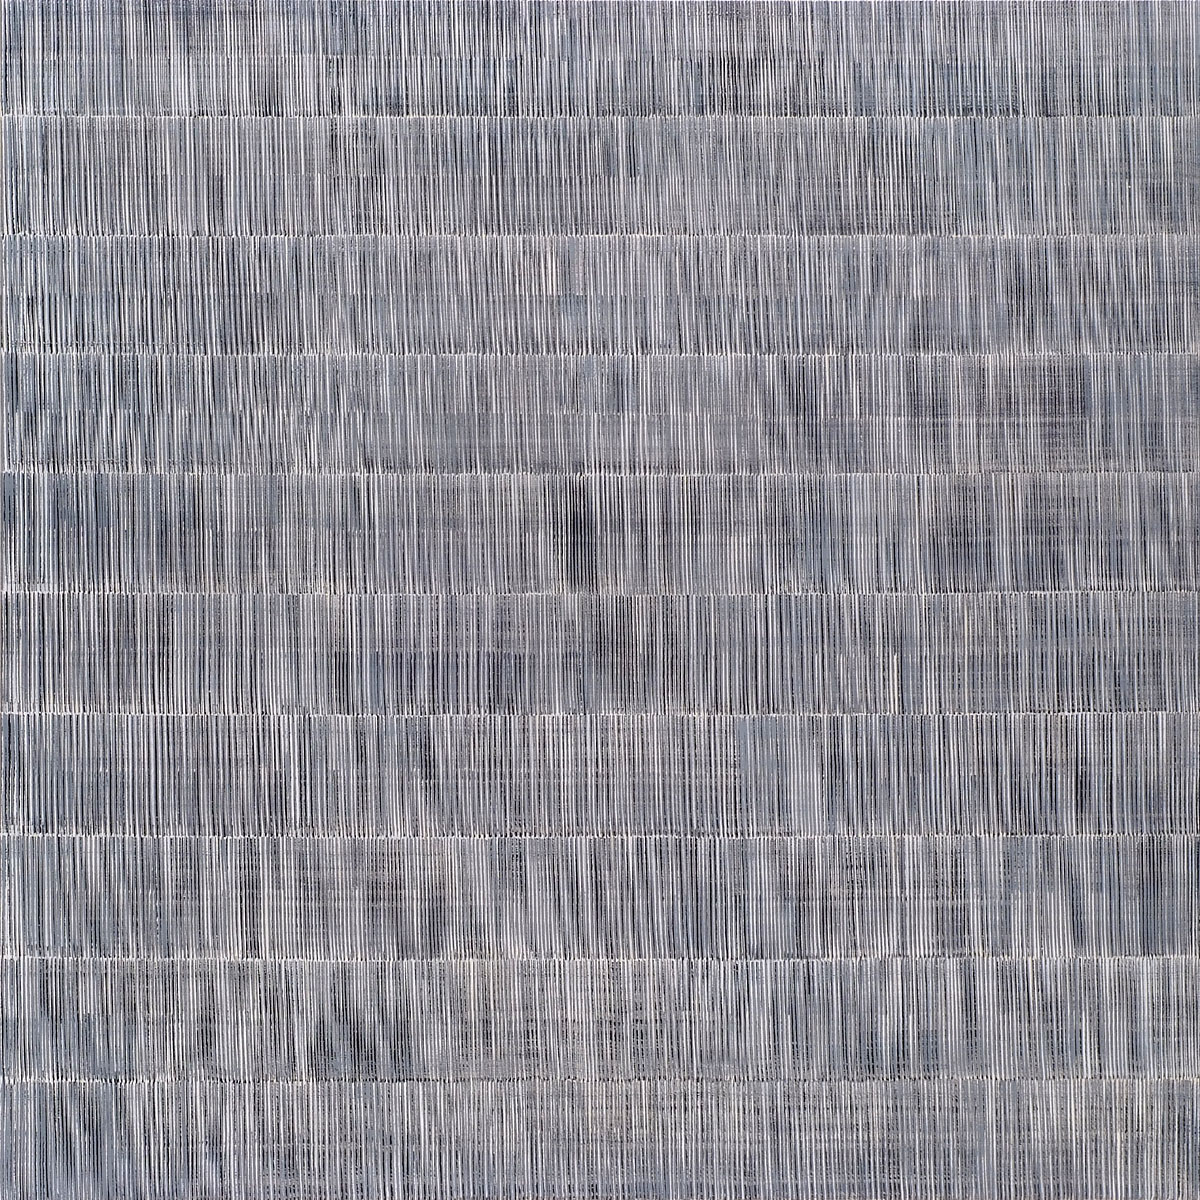 Nikola Dimitrov, Aria IV, 2011, 250 x 250 cm, Pigmente, Bindemittel, Lösungsmittel auf Leinwand